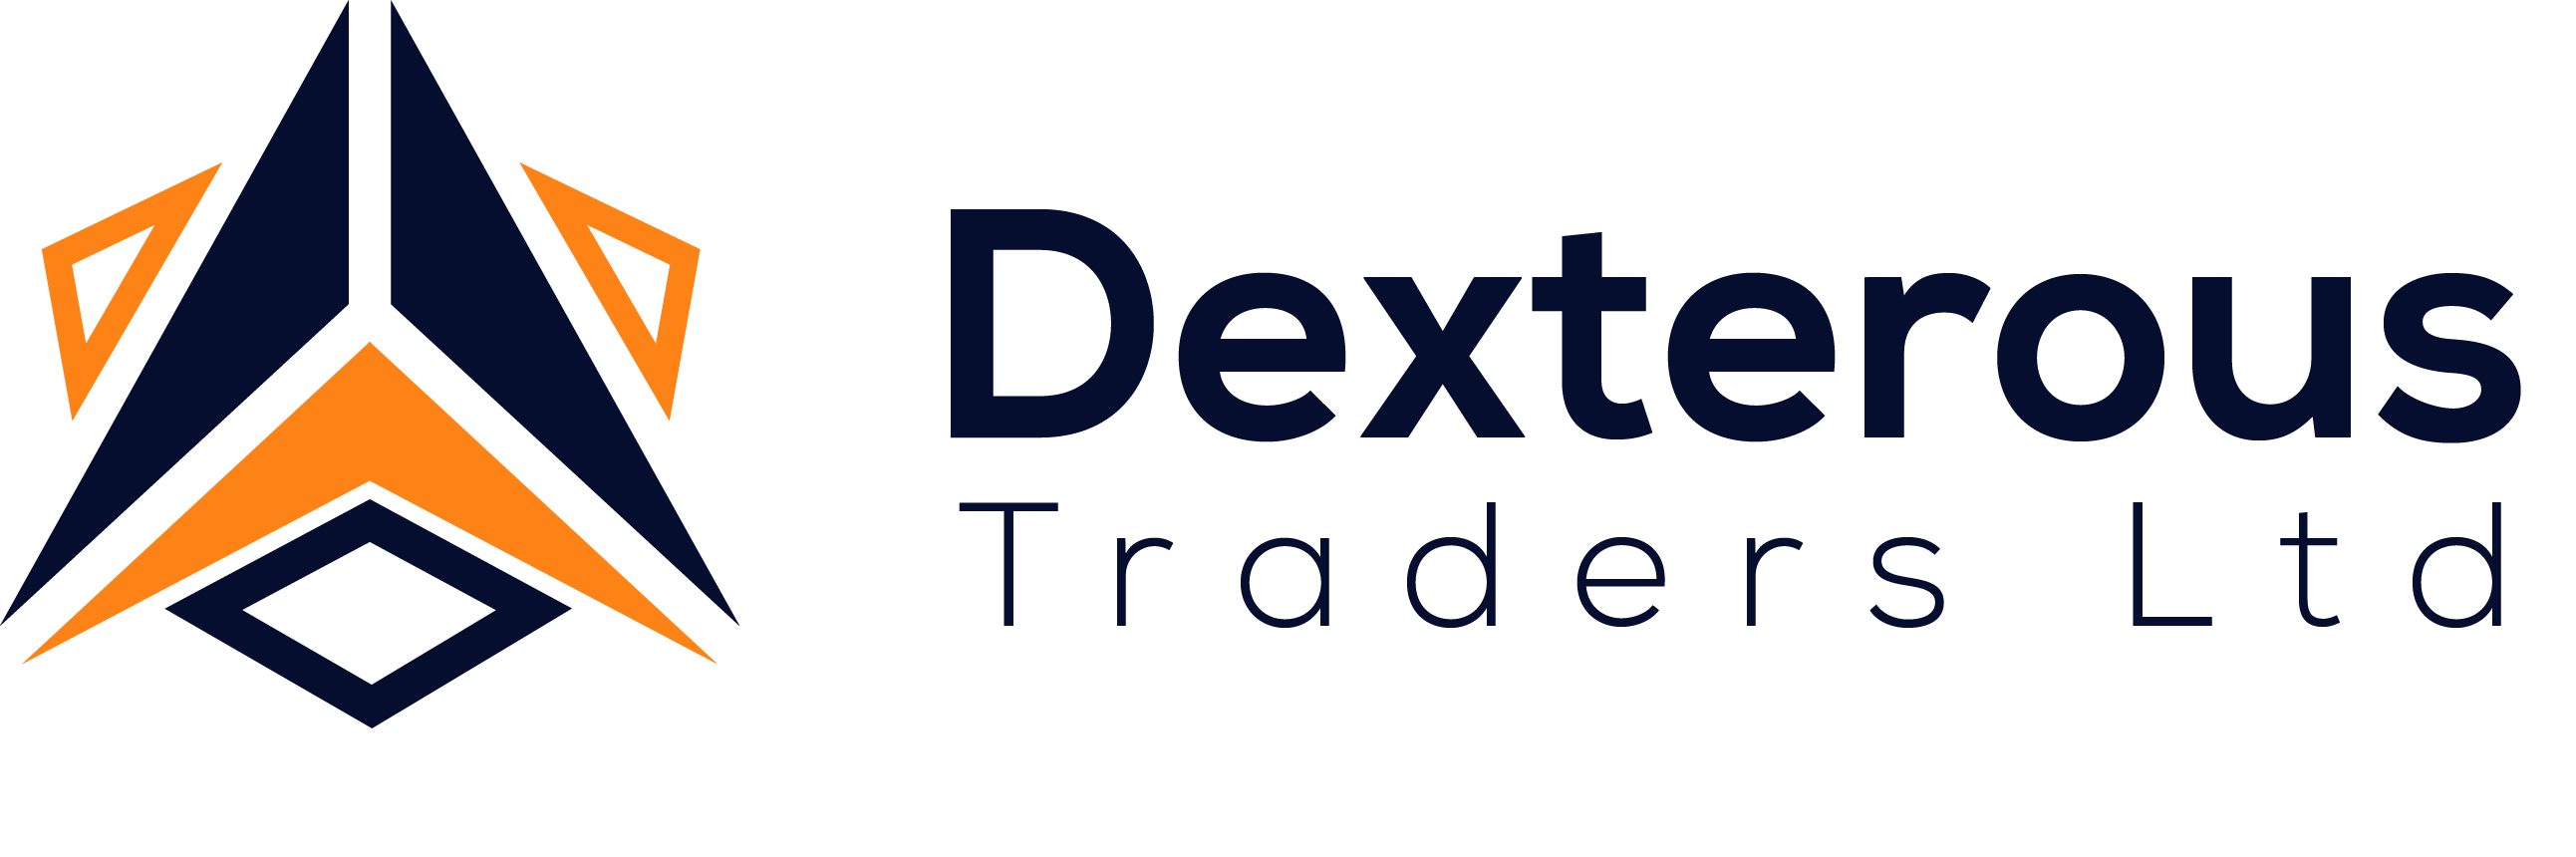 Dexterous Traders